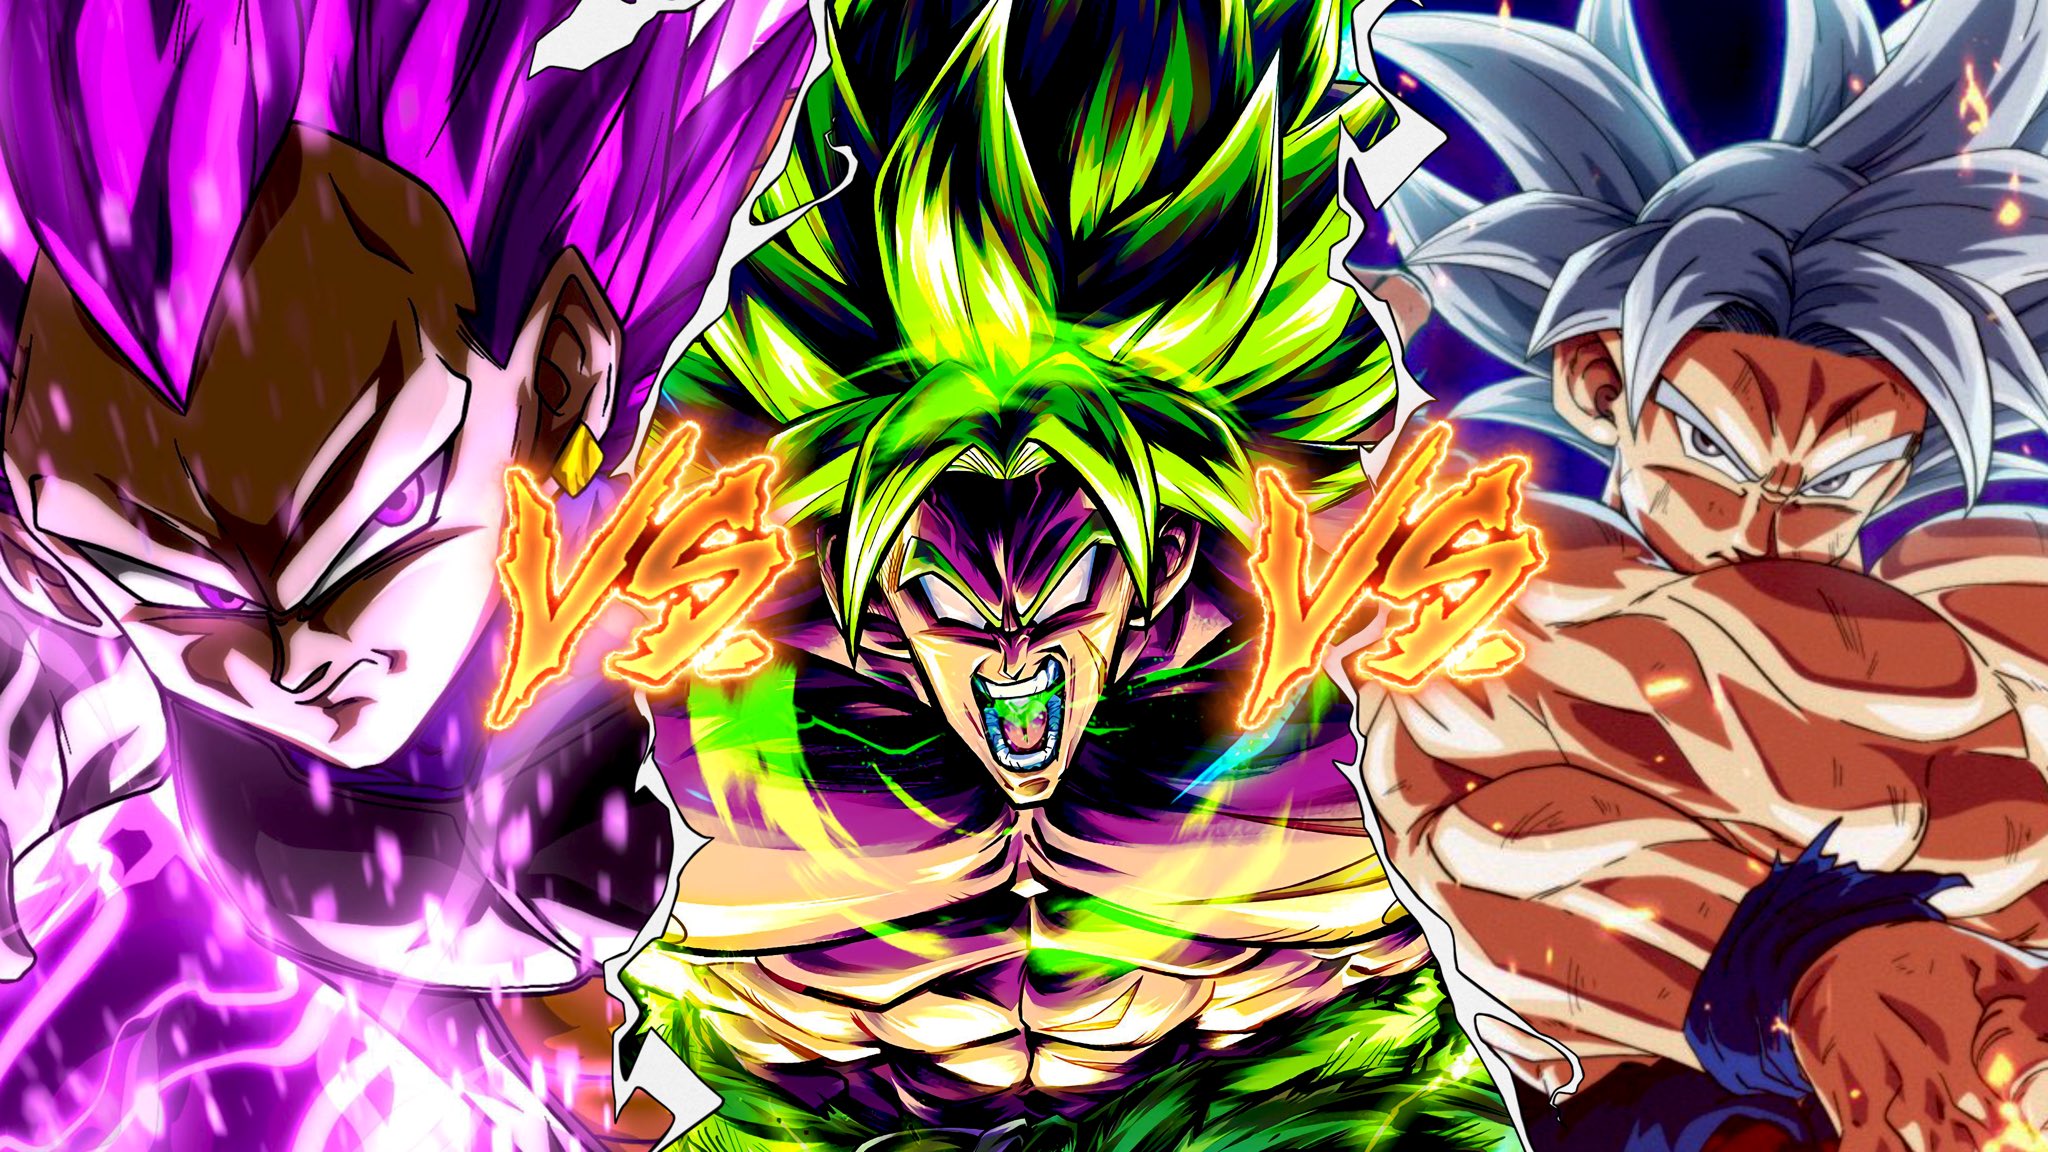 Hype Instinct Goku vs Ultra Ego Vegeta vs Broly Full Power Battle of Saiyans. Who Wins?